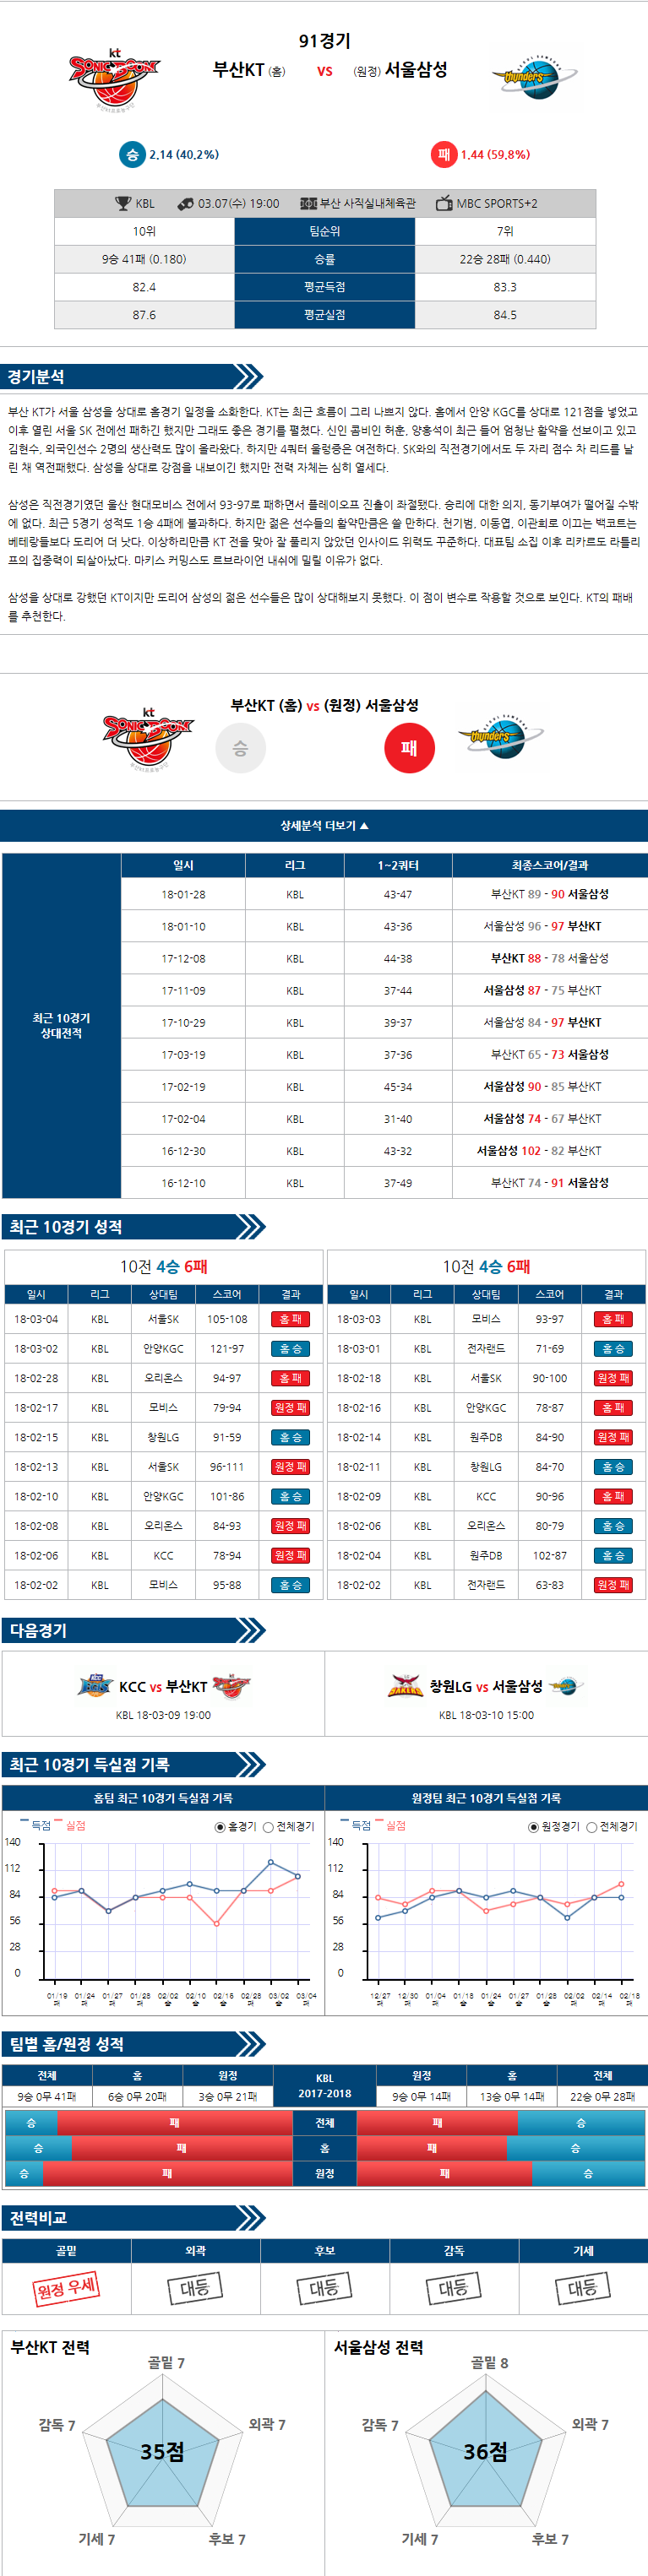 03-07 [KBL] 19:00 부산KT vs 서울삼성